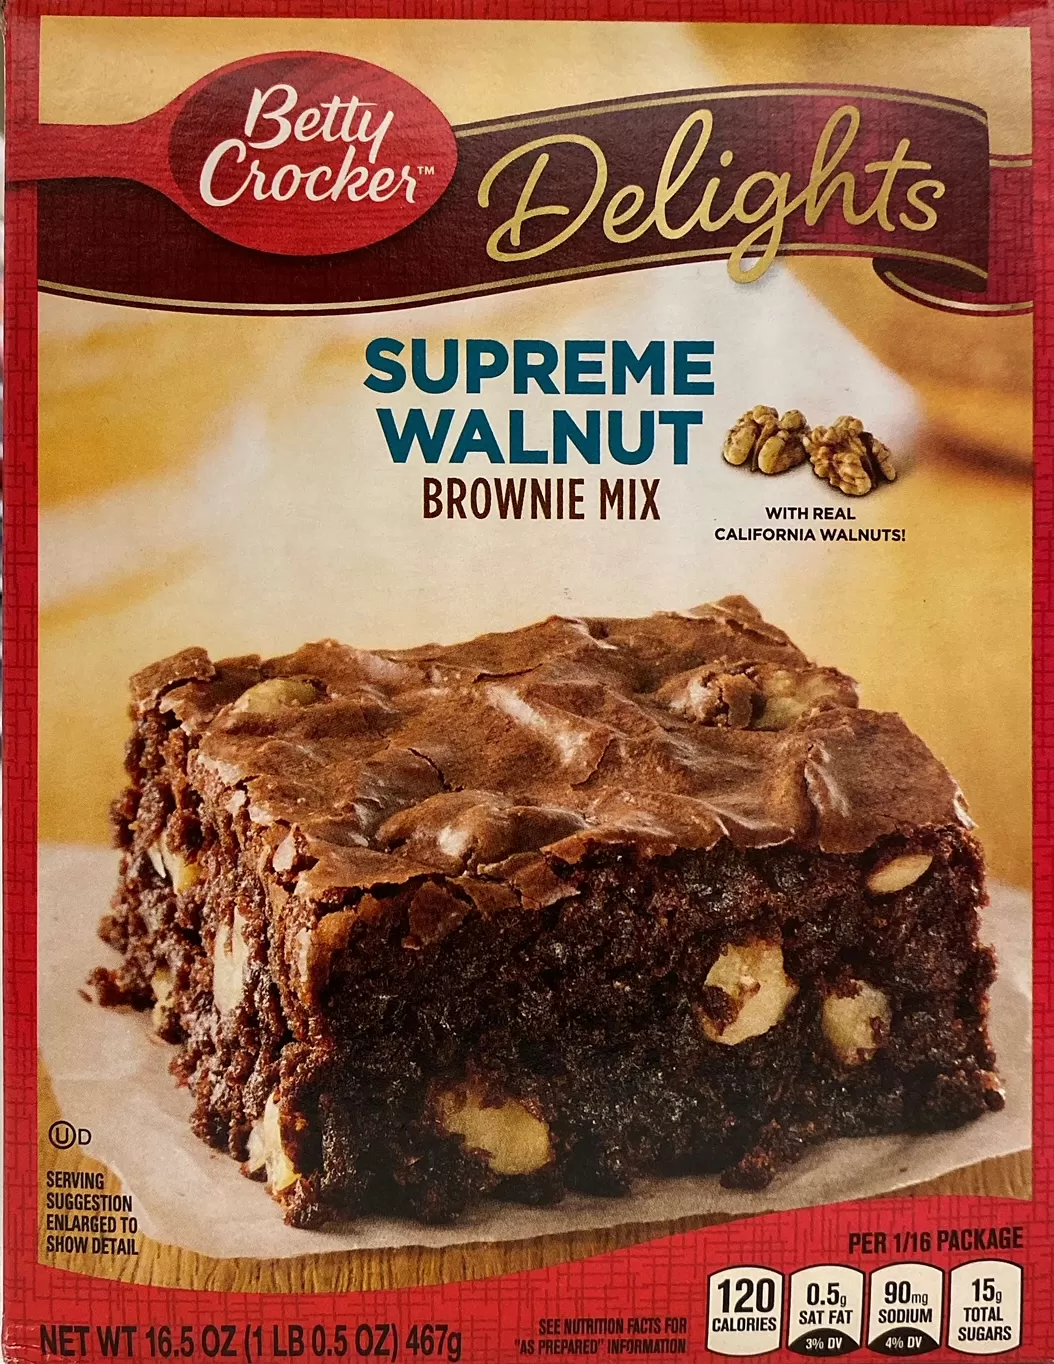 Box of Betty Crocker Supreme Walnut Brownie Mix